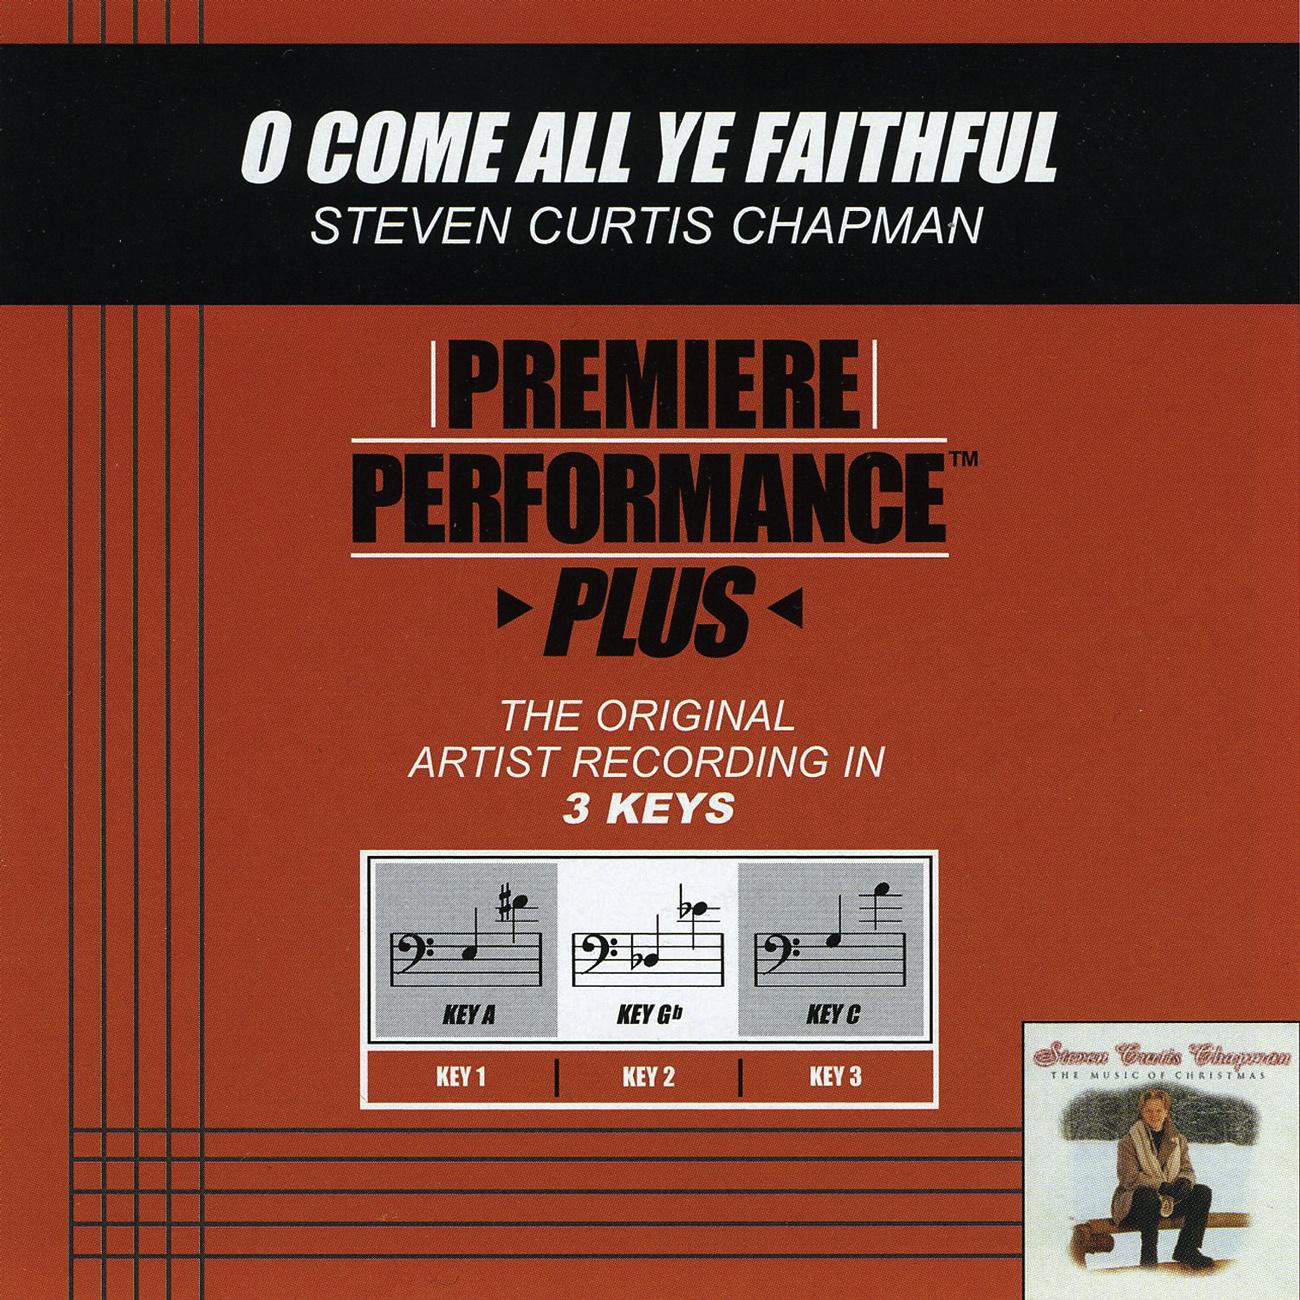 Steven Curtis Chapman - O Come All Ye Faithful